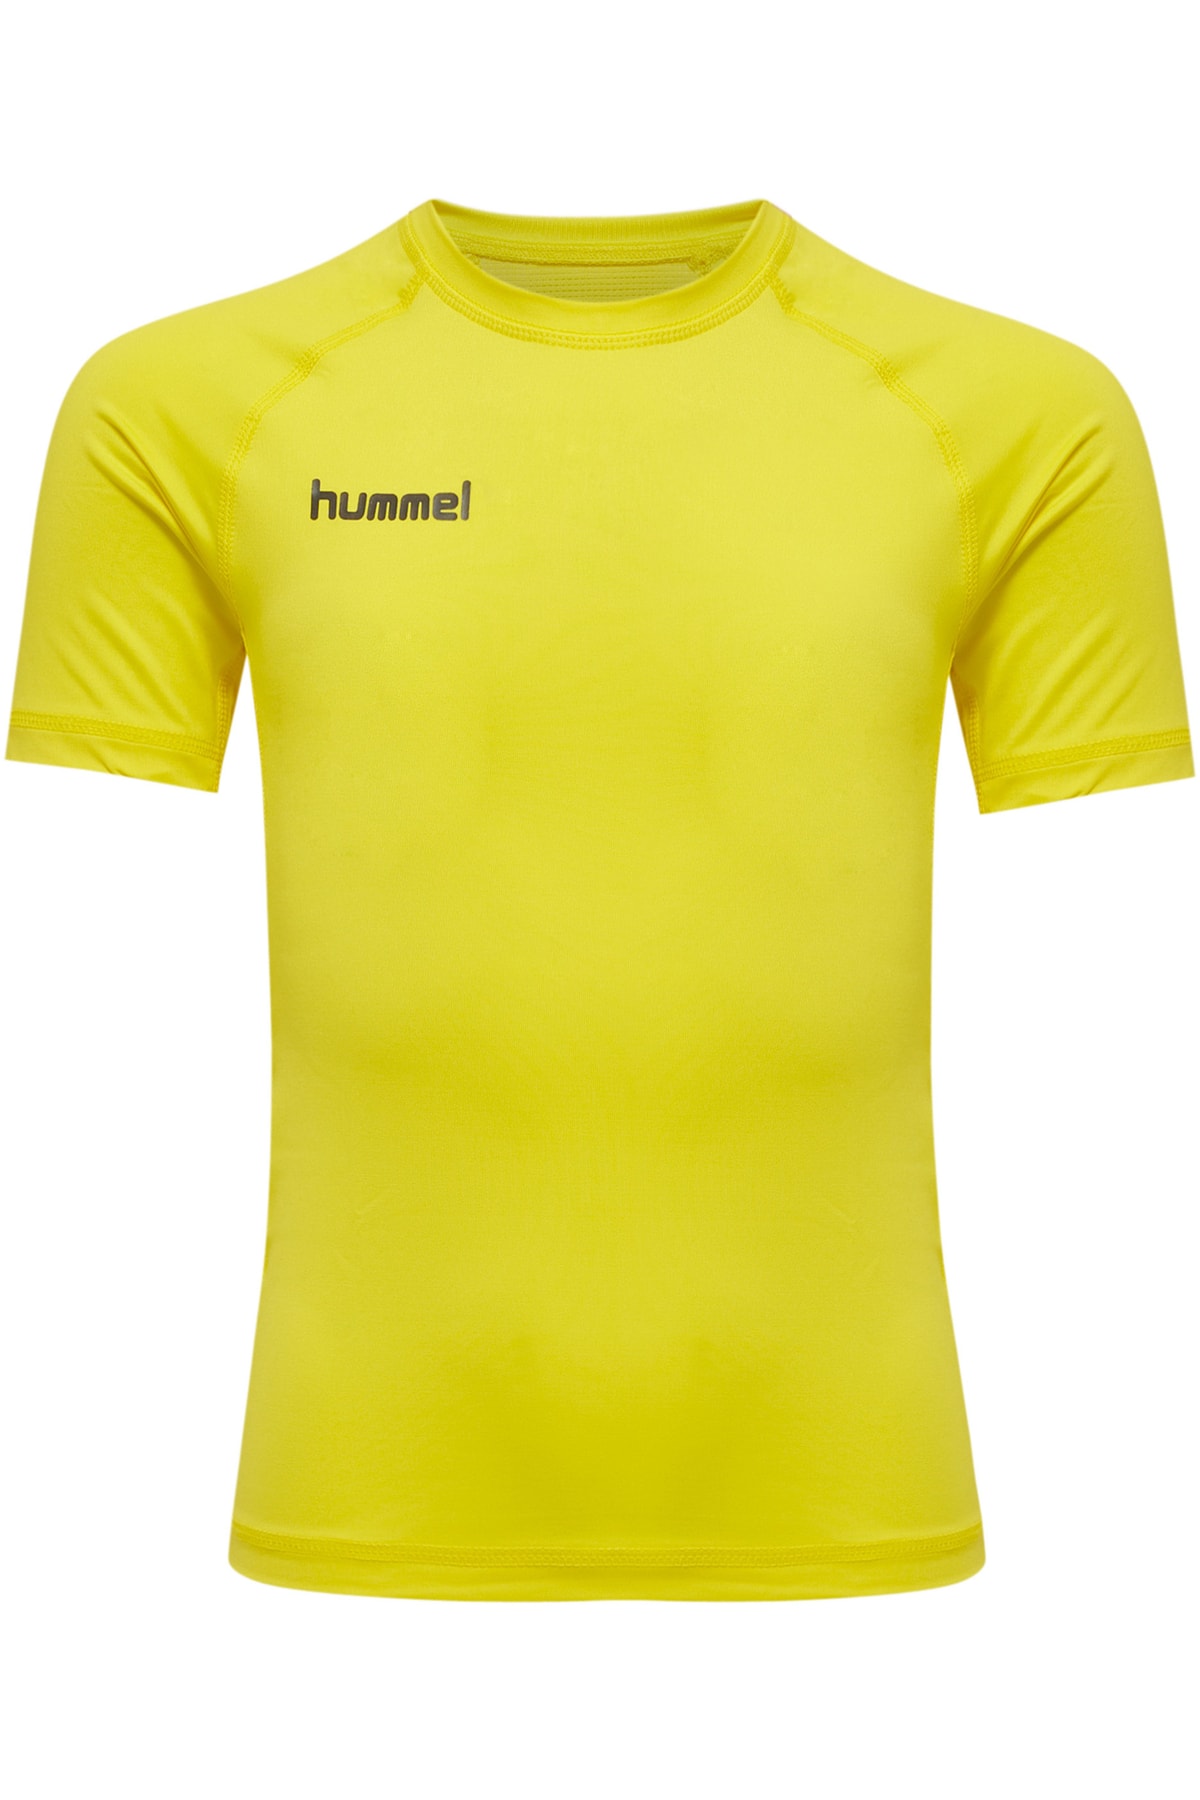 HUMMEL T-Shirt Gelb Slim Fit